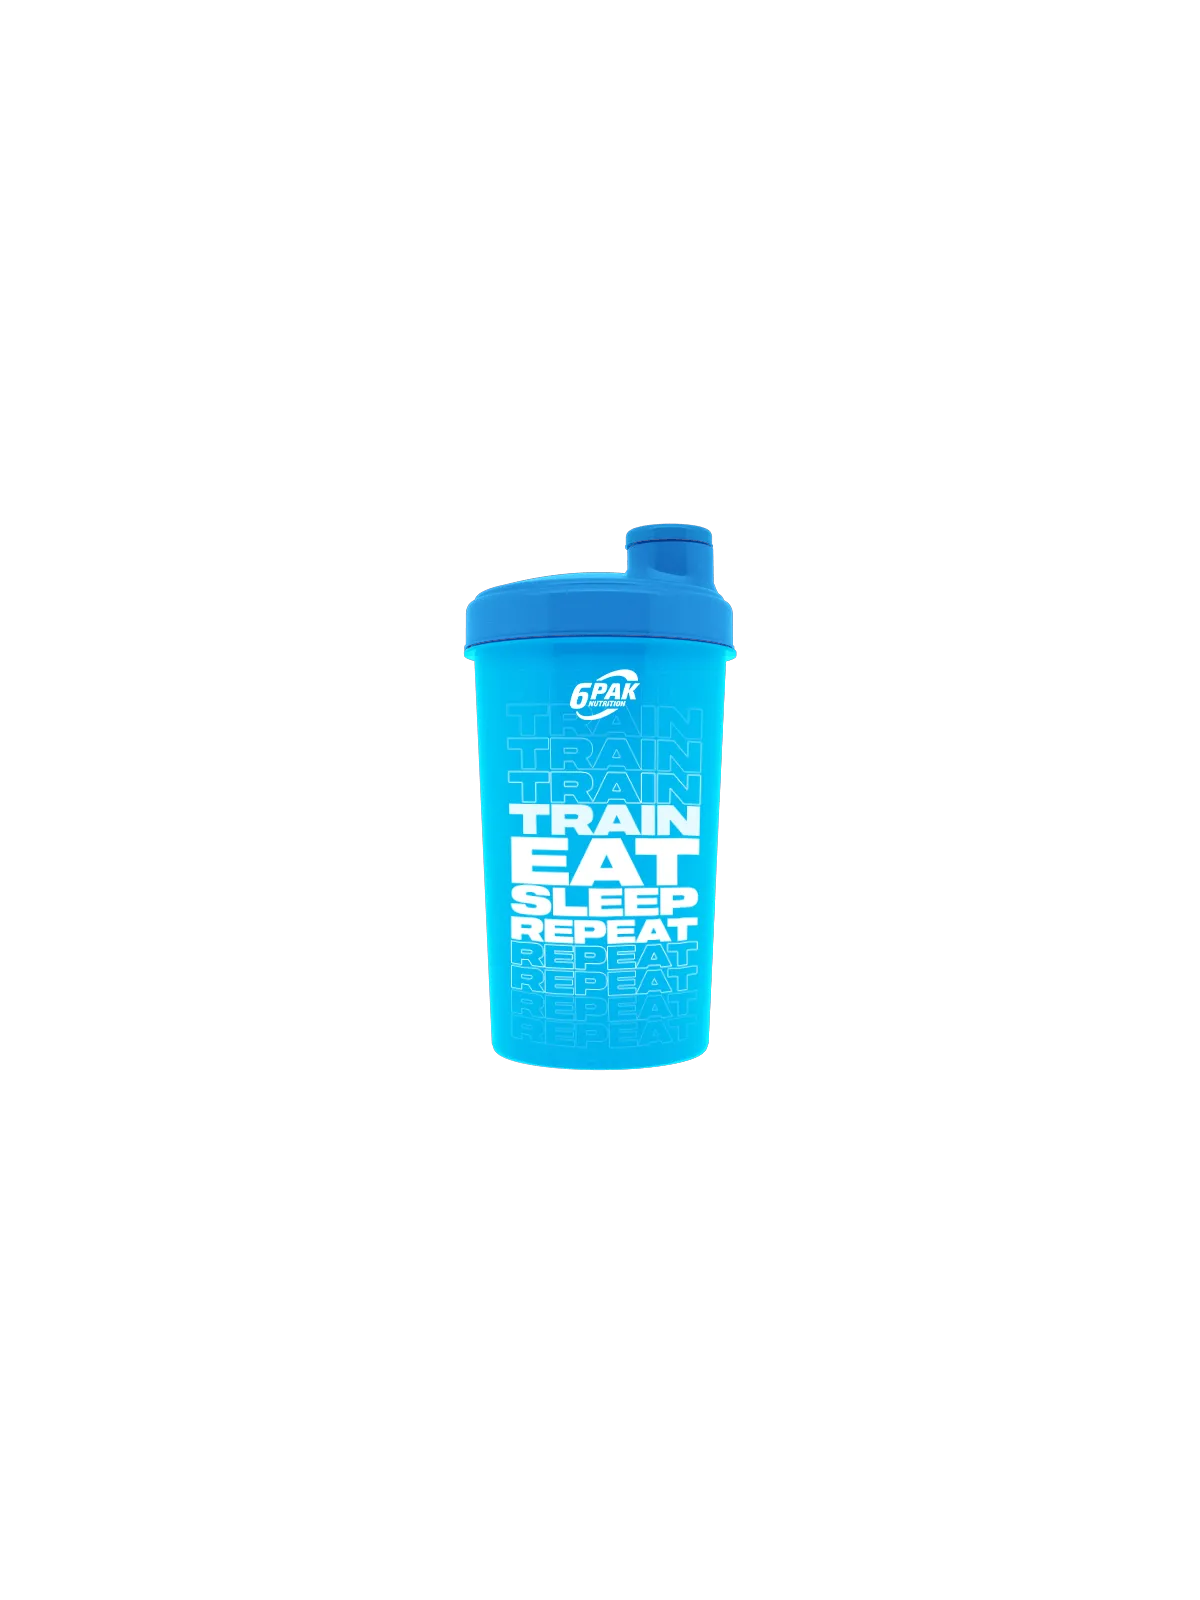 Shaker Niebieski Neonowy 700 ml - TRAIN EAT SLEEP REPEAT - 1 szt.